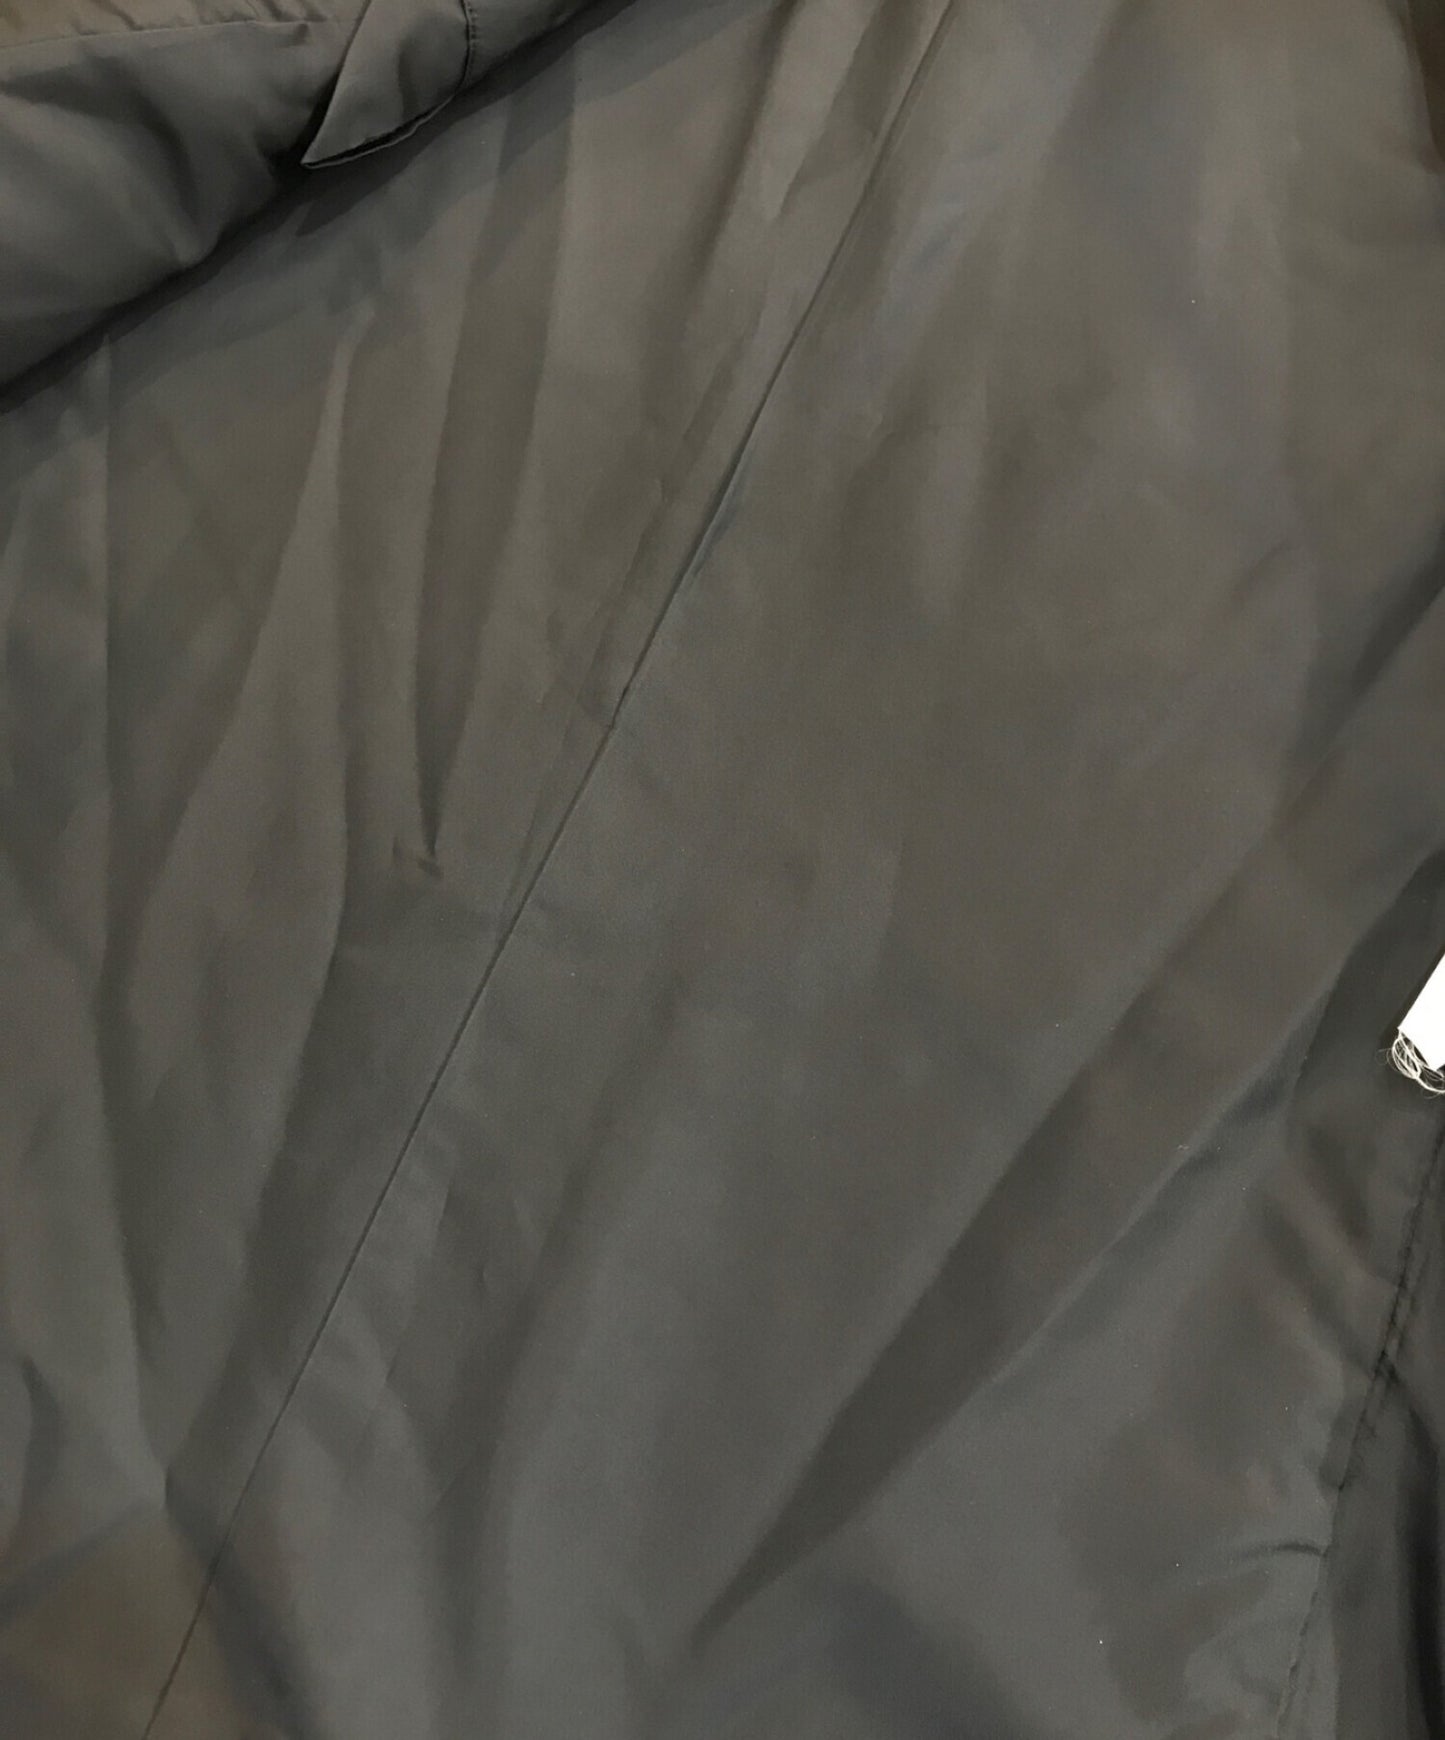 Yohji Yamamoto 테일러드 재킷 자켓